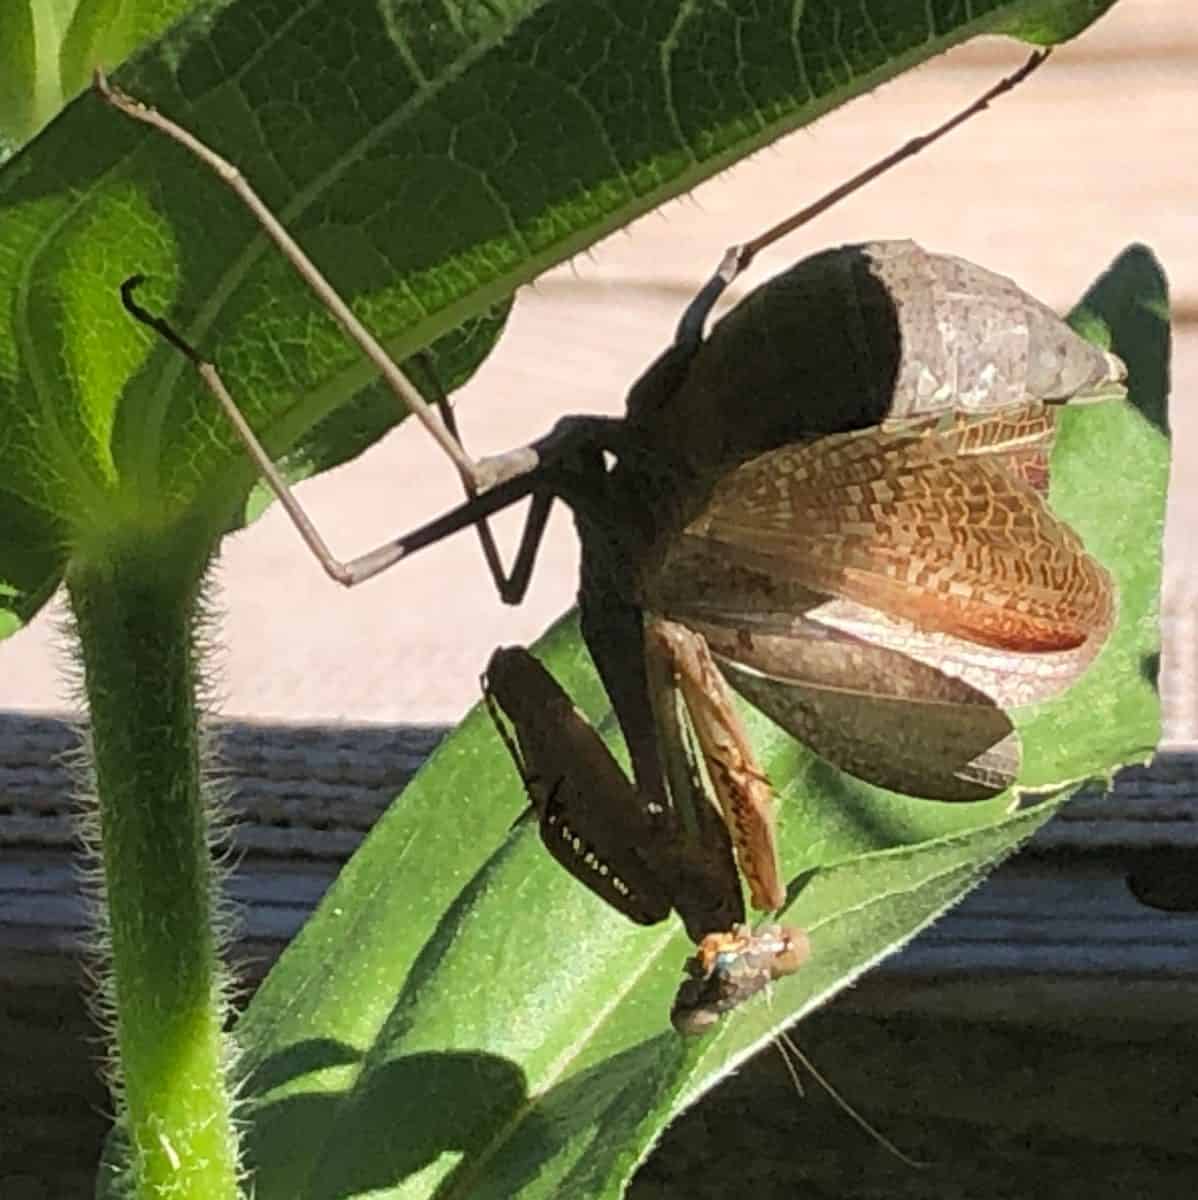 A praying mantis puffed herself to impress a nearby predator.